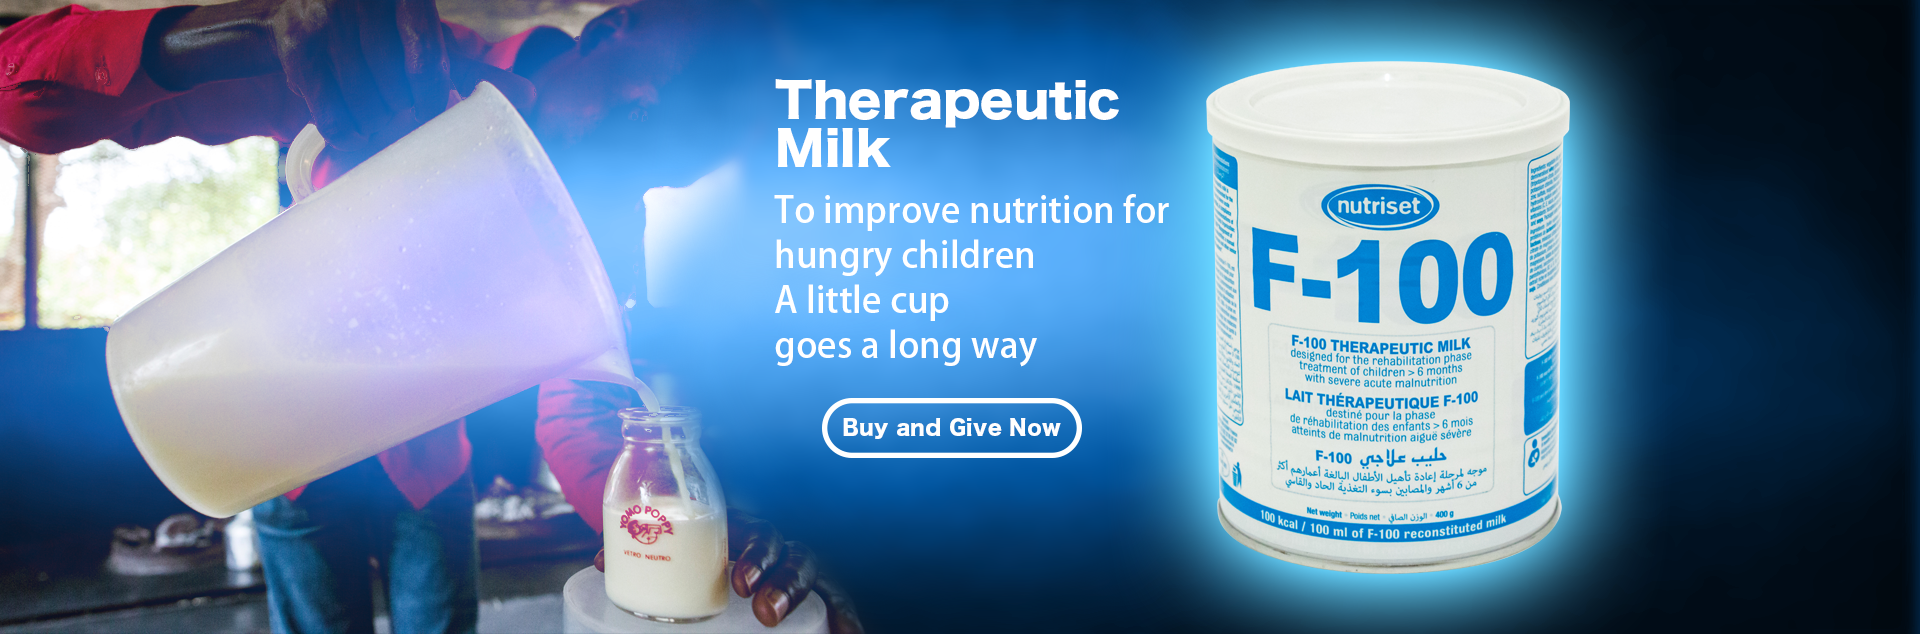 Therapeutic Milk